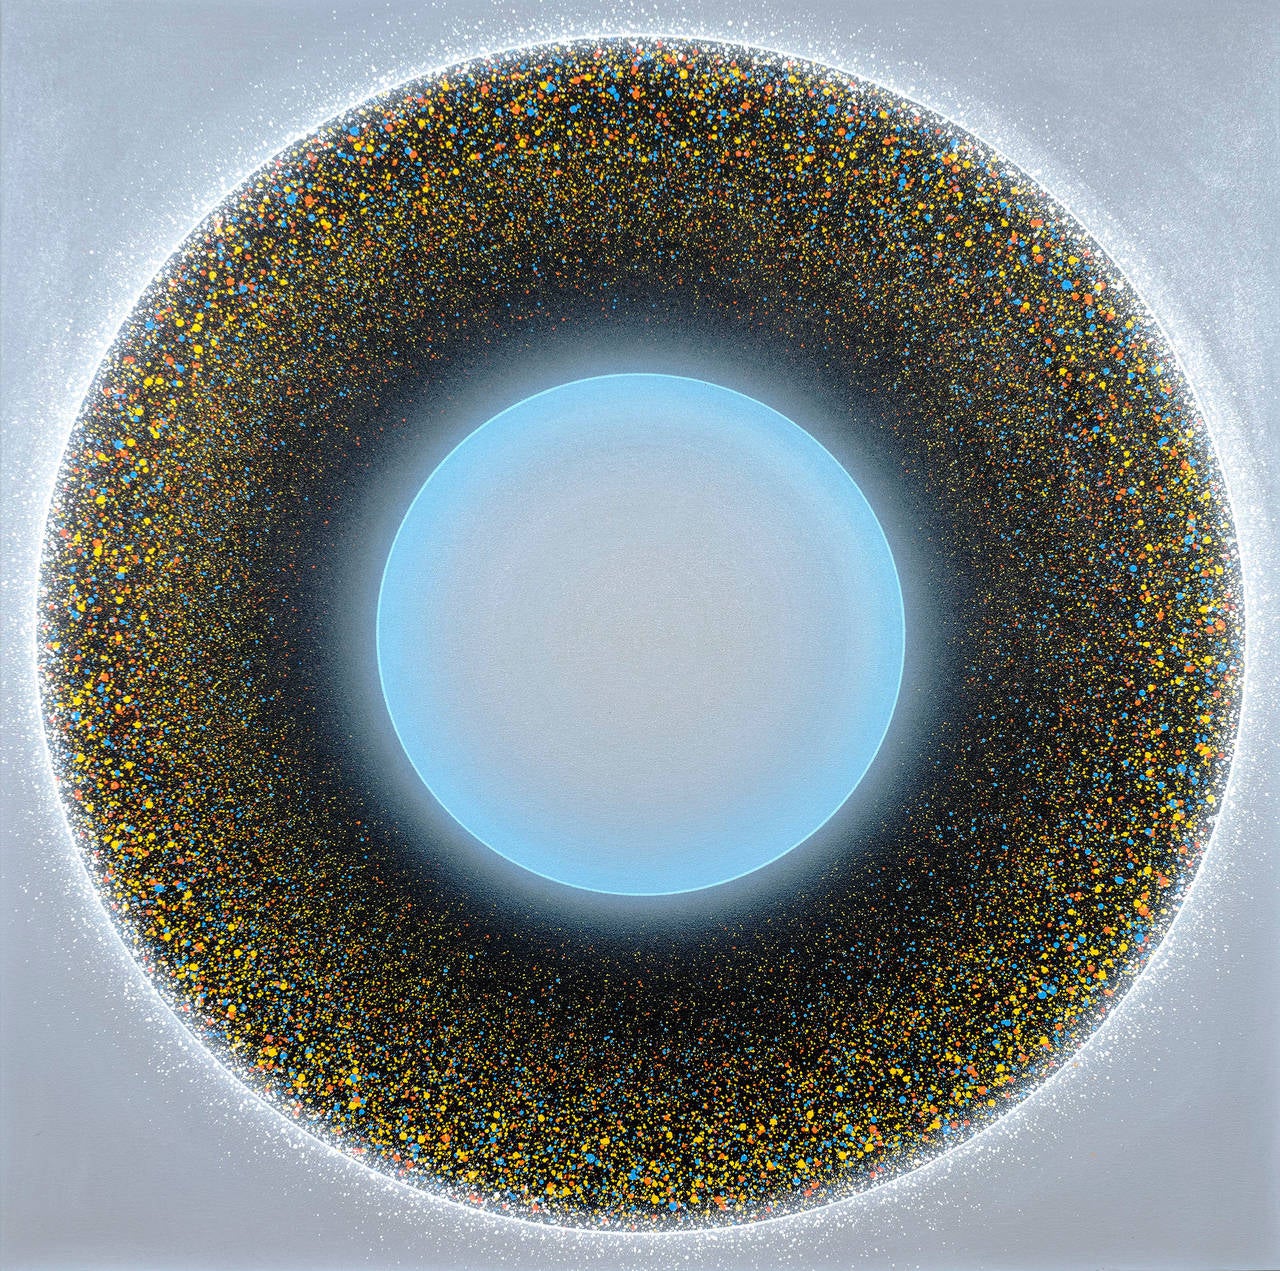 Tadasky / Tadasuke Kuwayama Abstract Painting - M-221 (Small Multicolor with Blue Center)